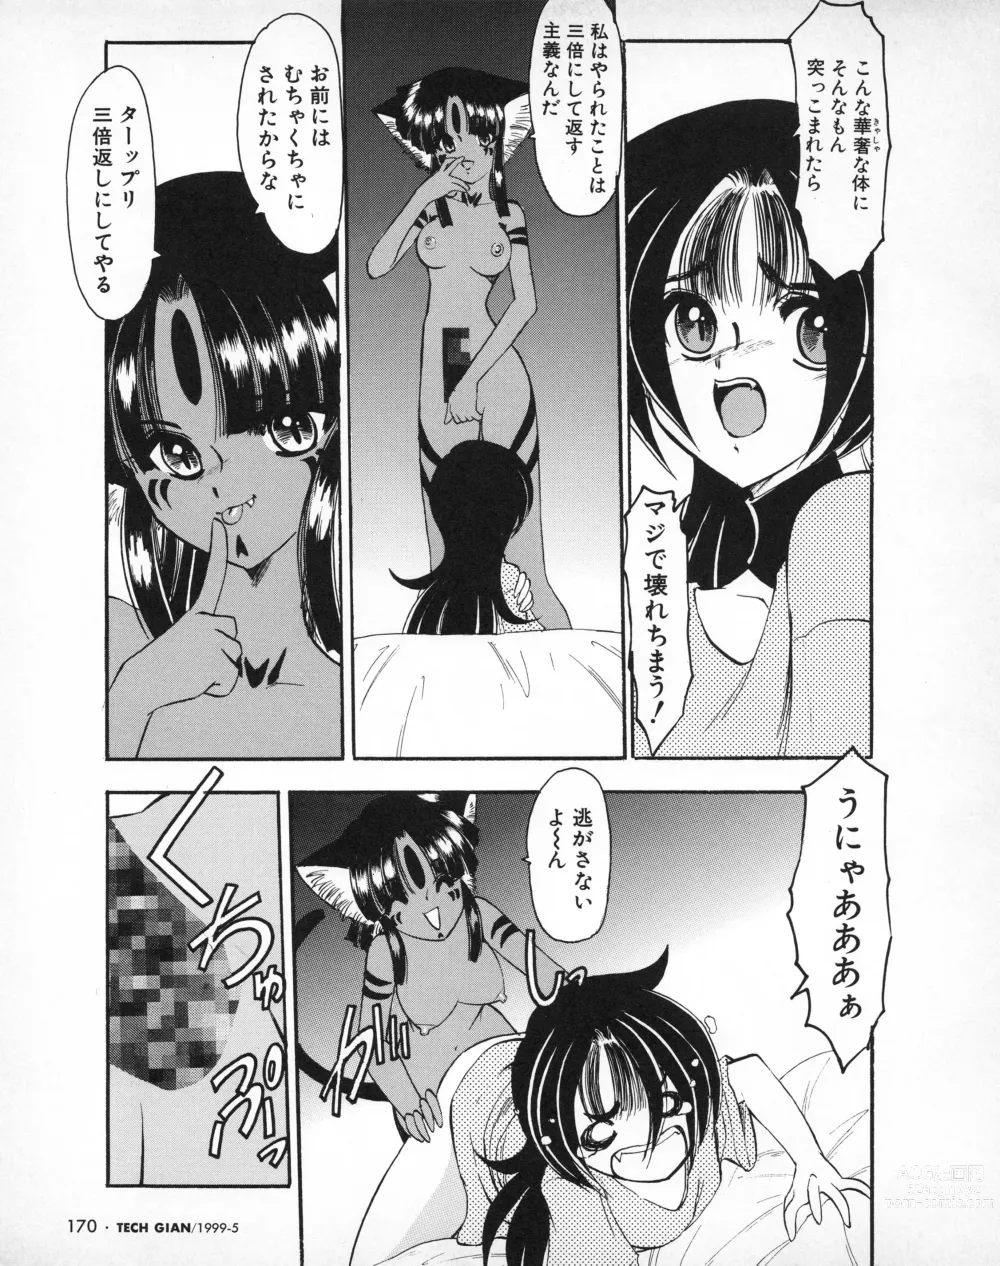 Page 173 of manga Tech Gian 031